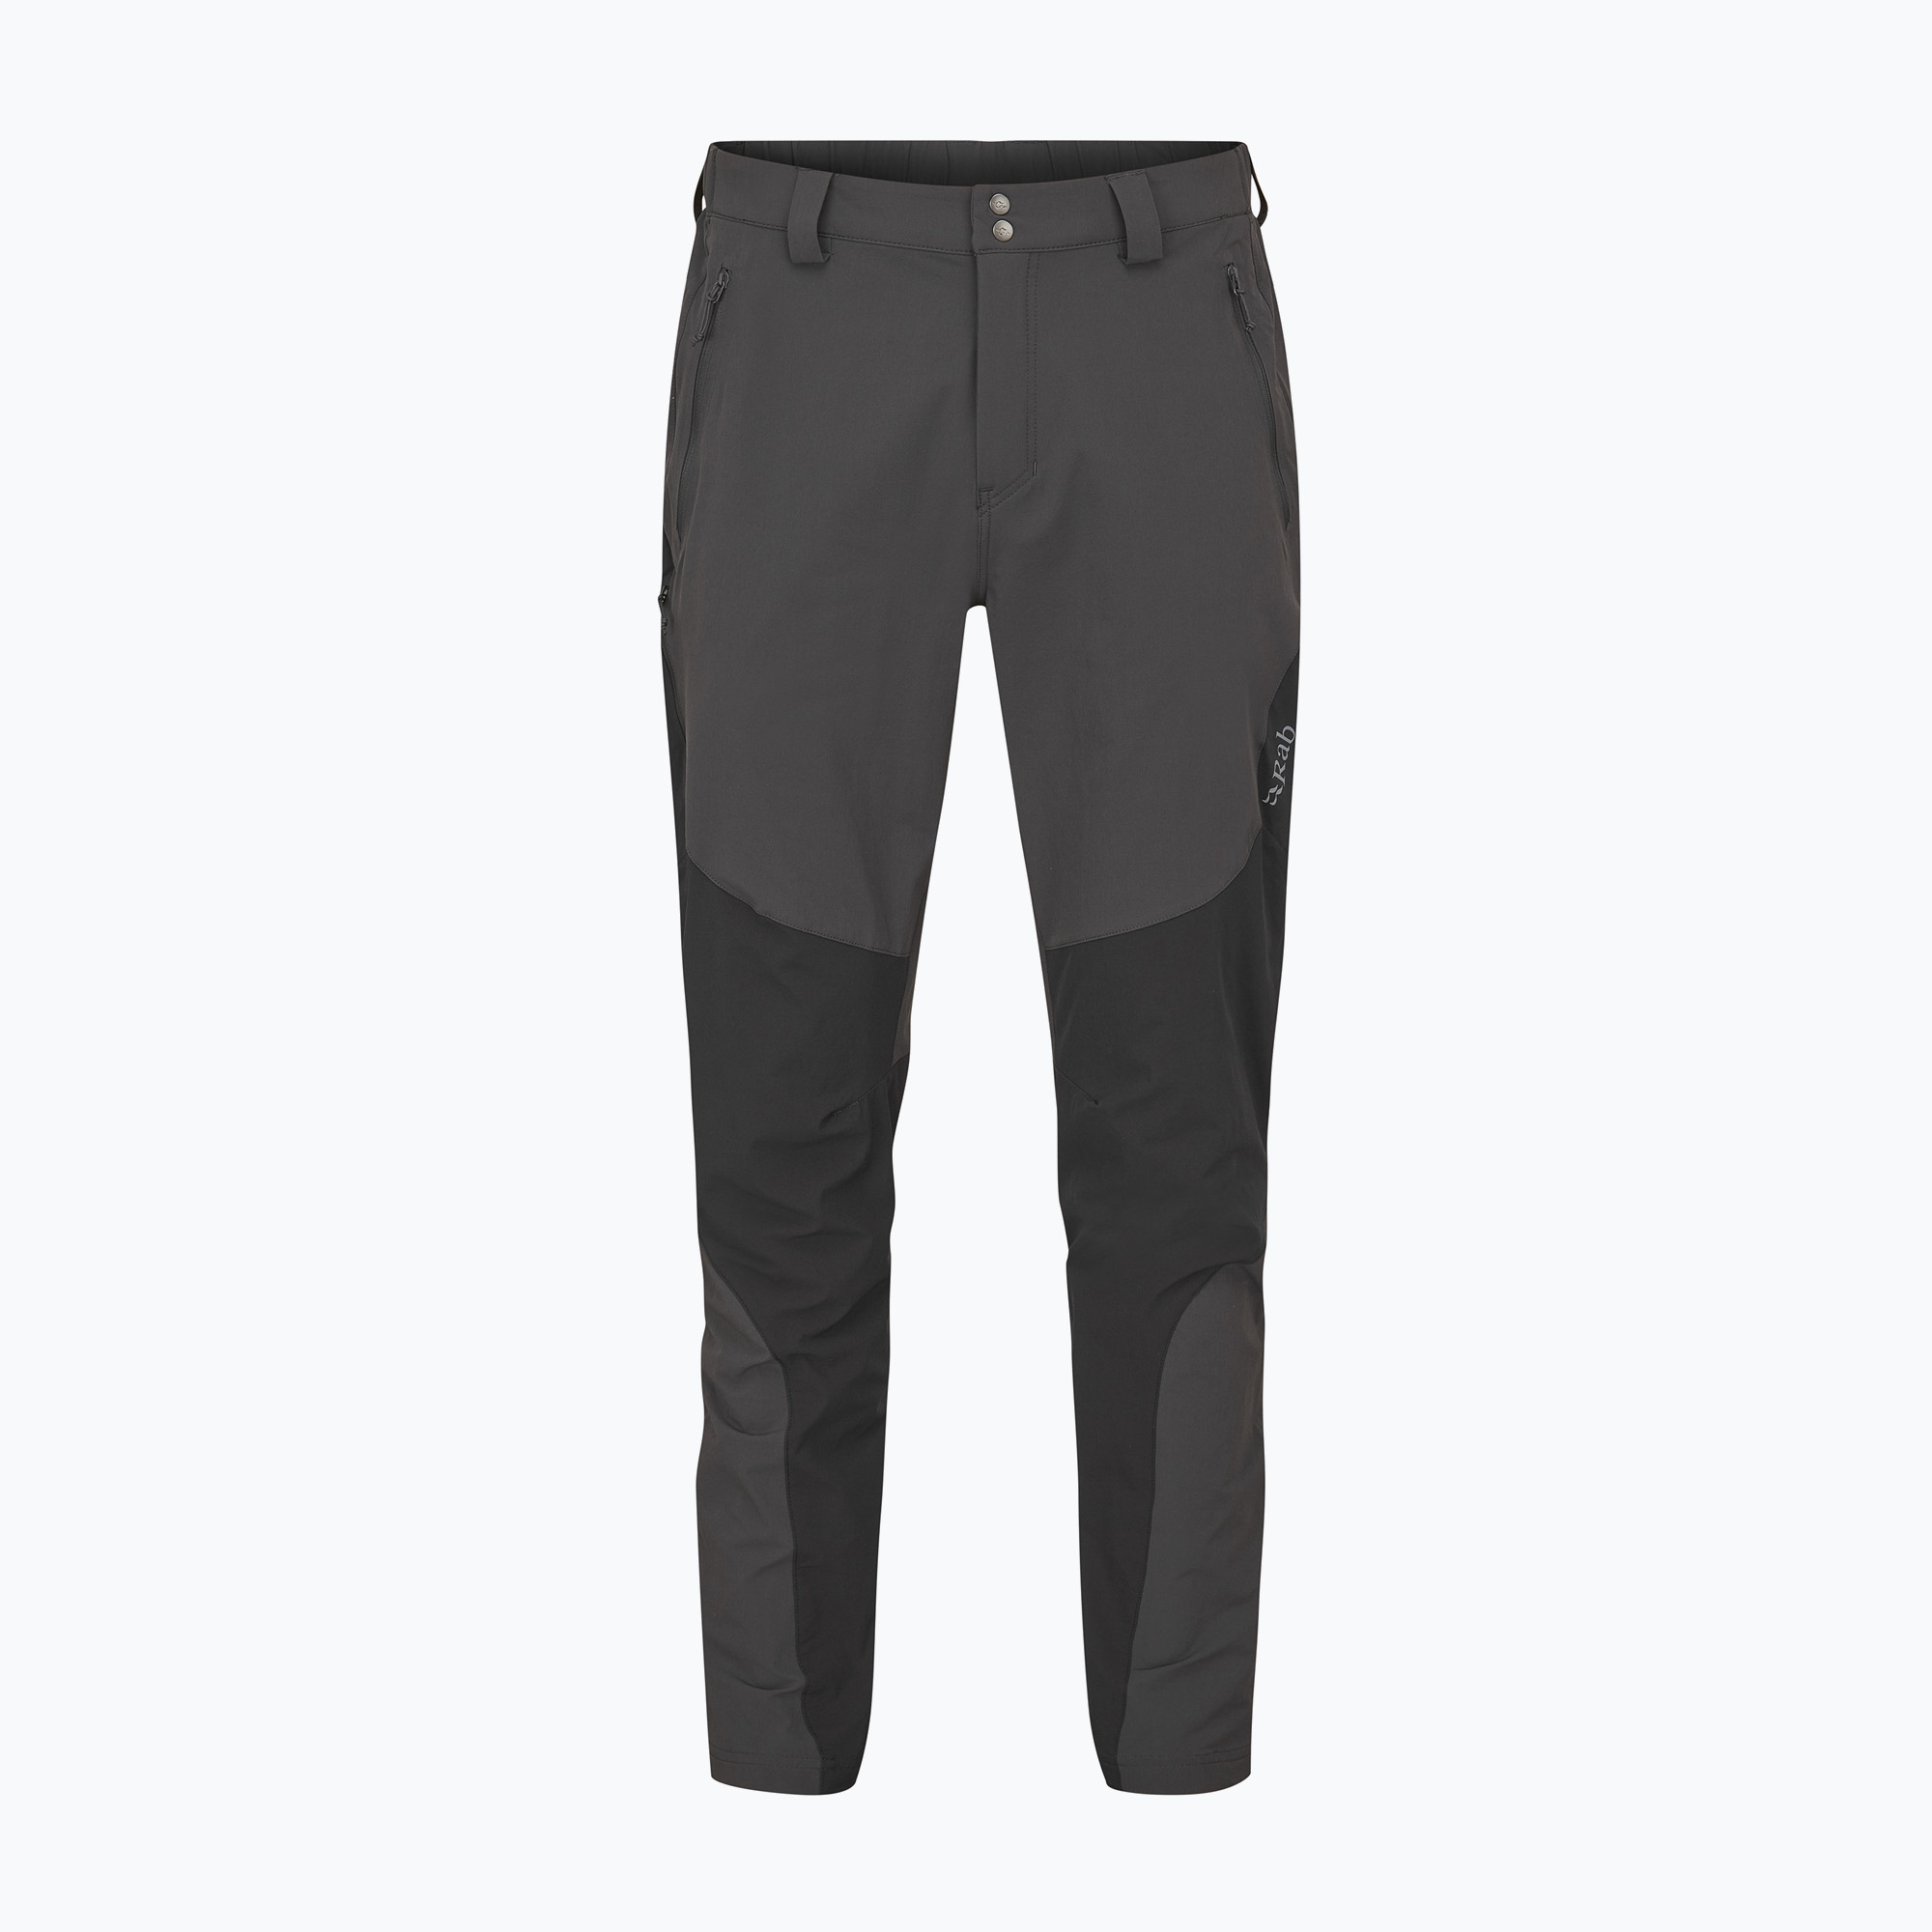 Pantaloni softshell pentru bărbați Rab Torque Mountain antracit/negru